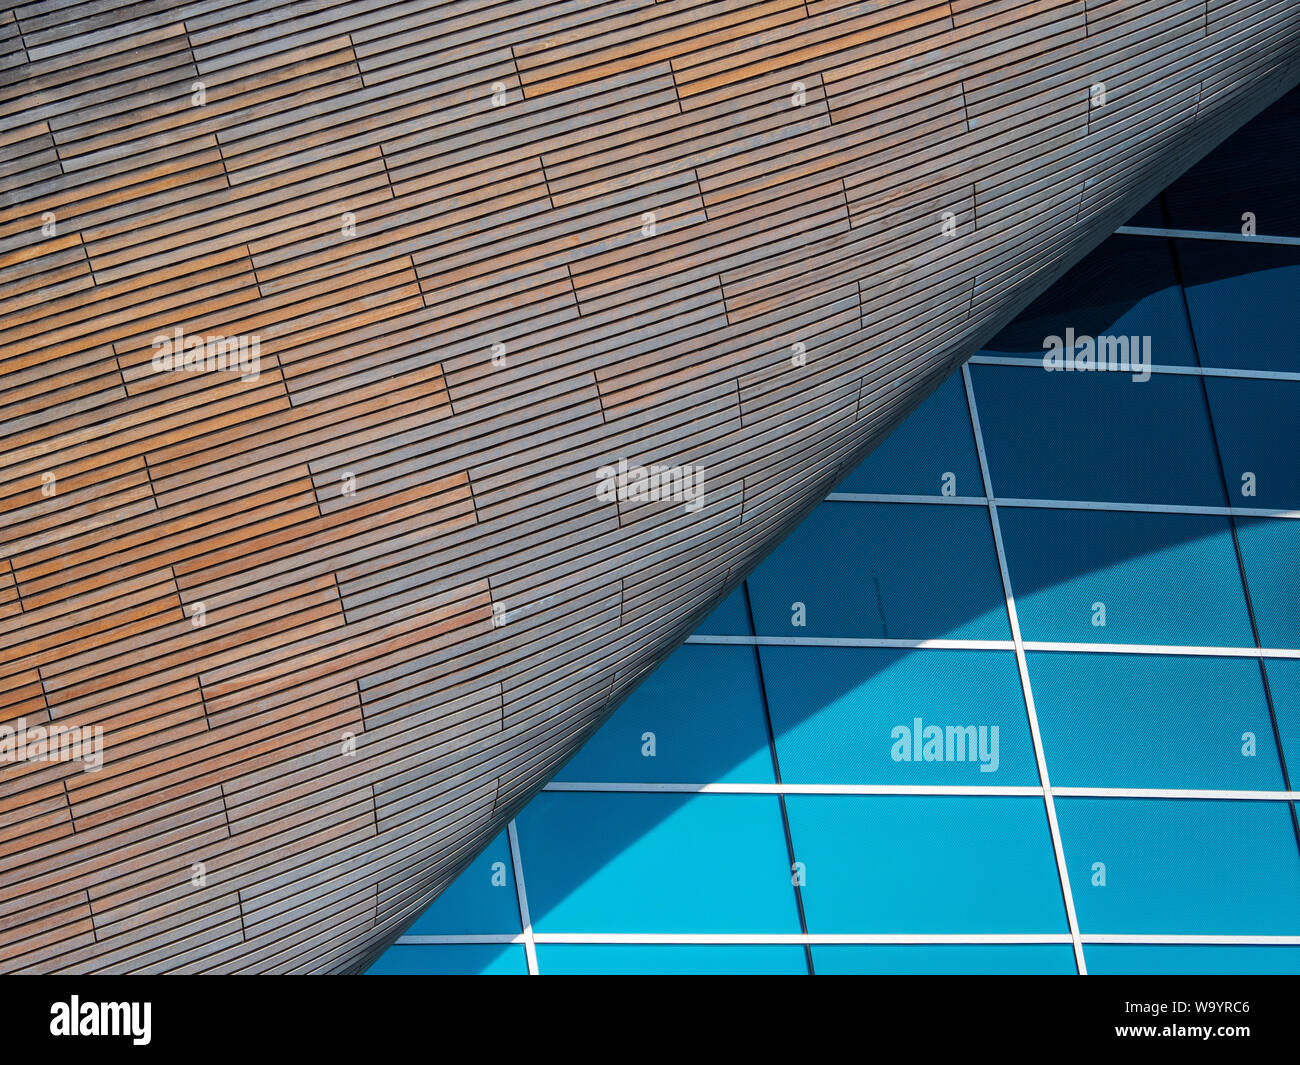 London Aquatics Center Design Details - Olympics Pools für Olympia 2012 - Design Zaha Hadid Architects. Kompl. 2011, kostet £ 269 Millionen. Stockfoto